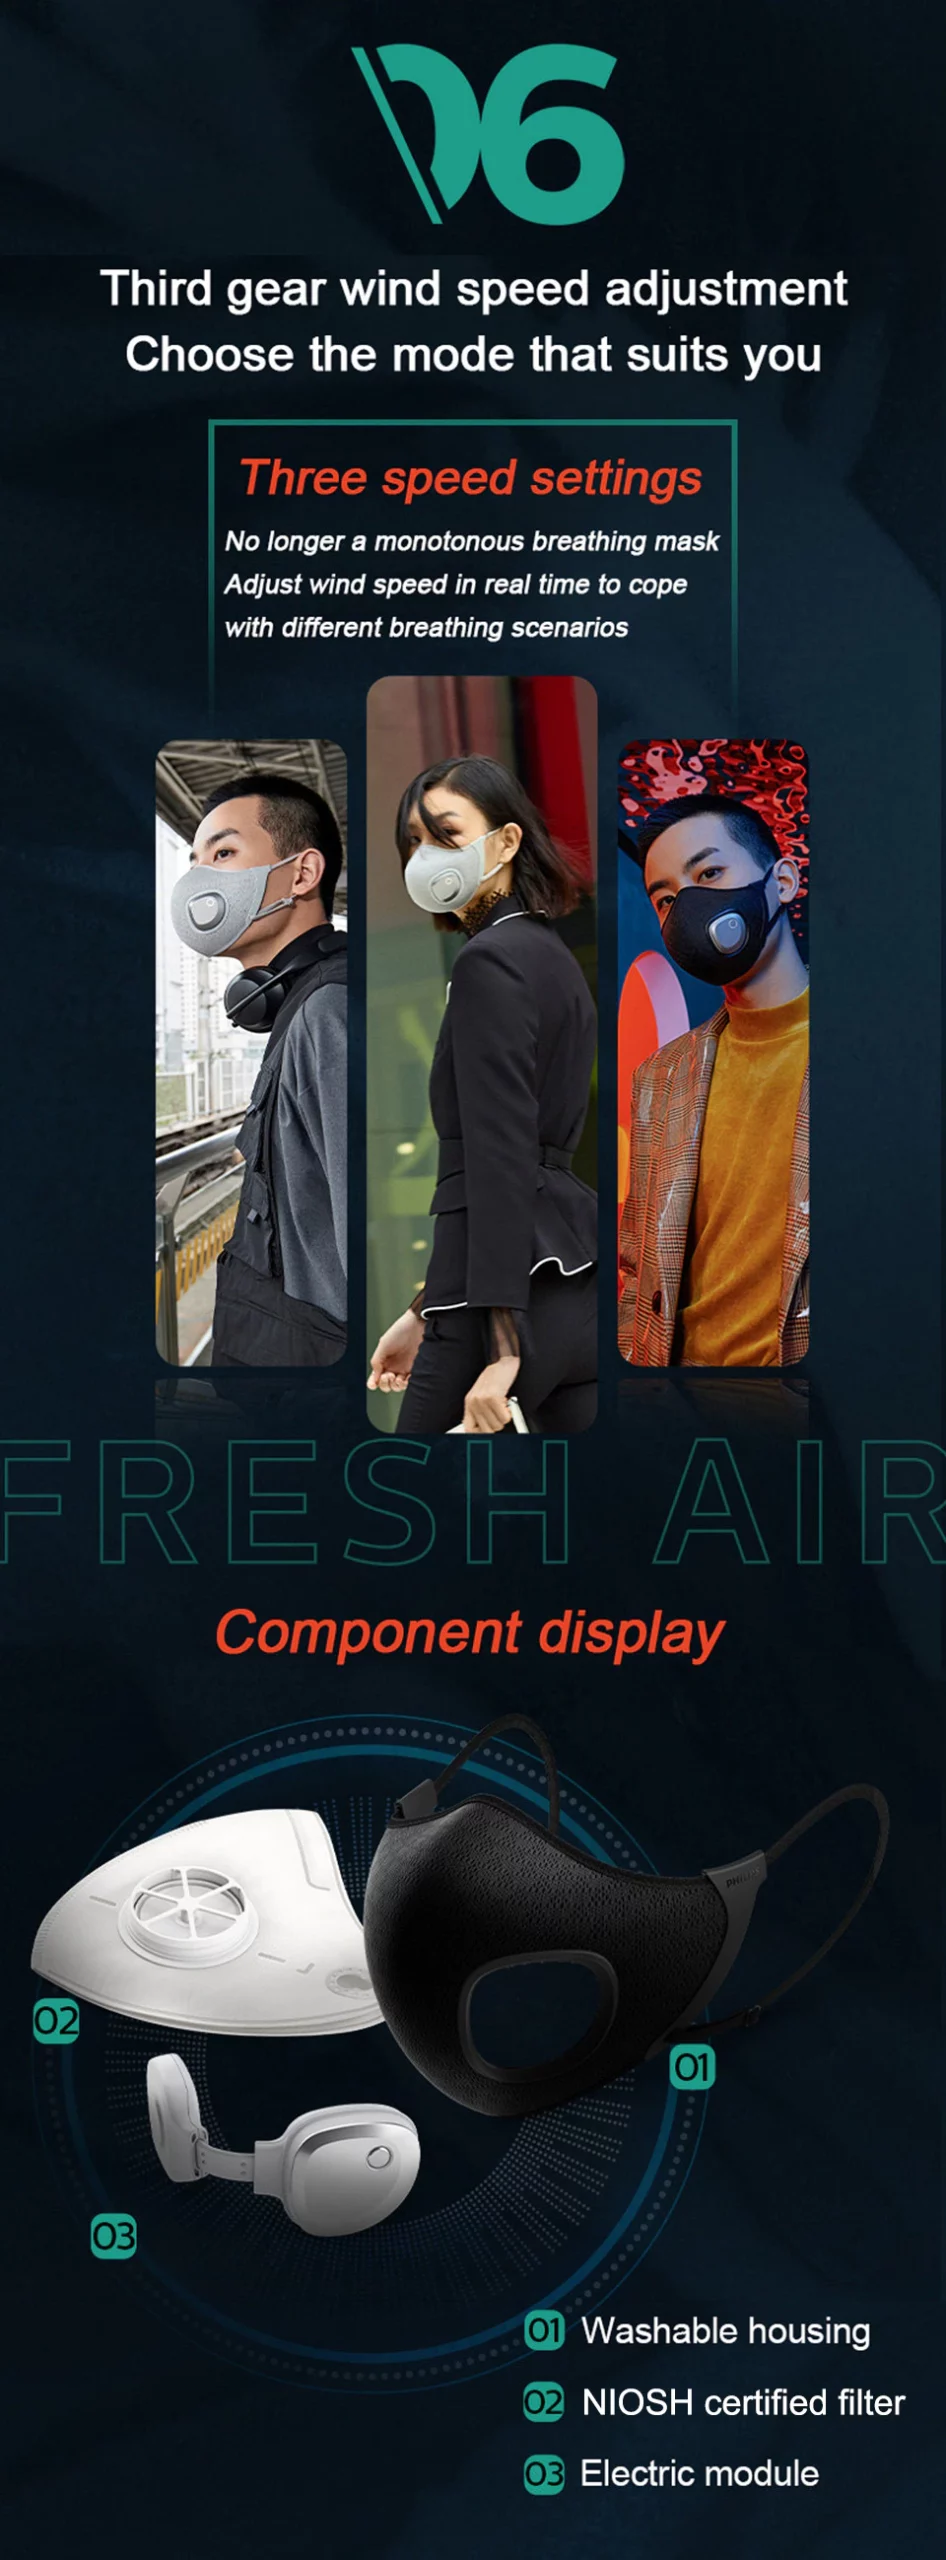 Philips fresh air mask